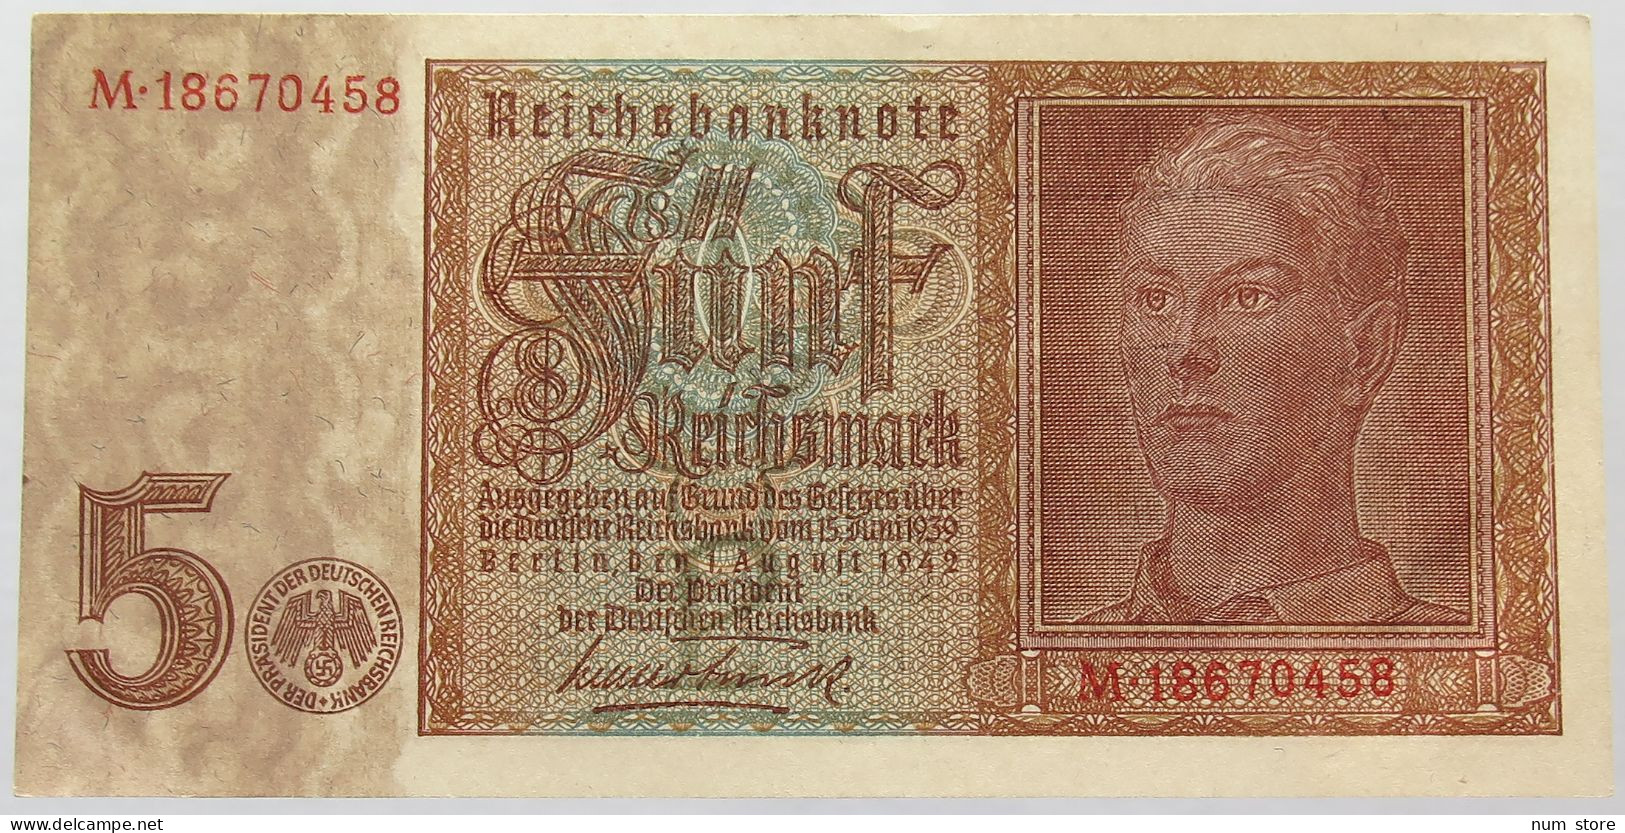 GERMANY 5 MARK 1942 TOP #alb016 0299 - 5 Reichsmark